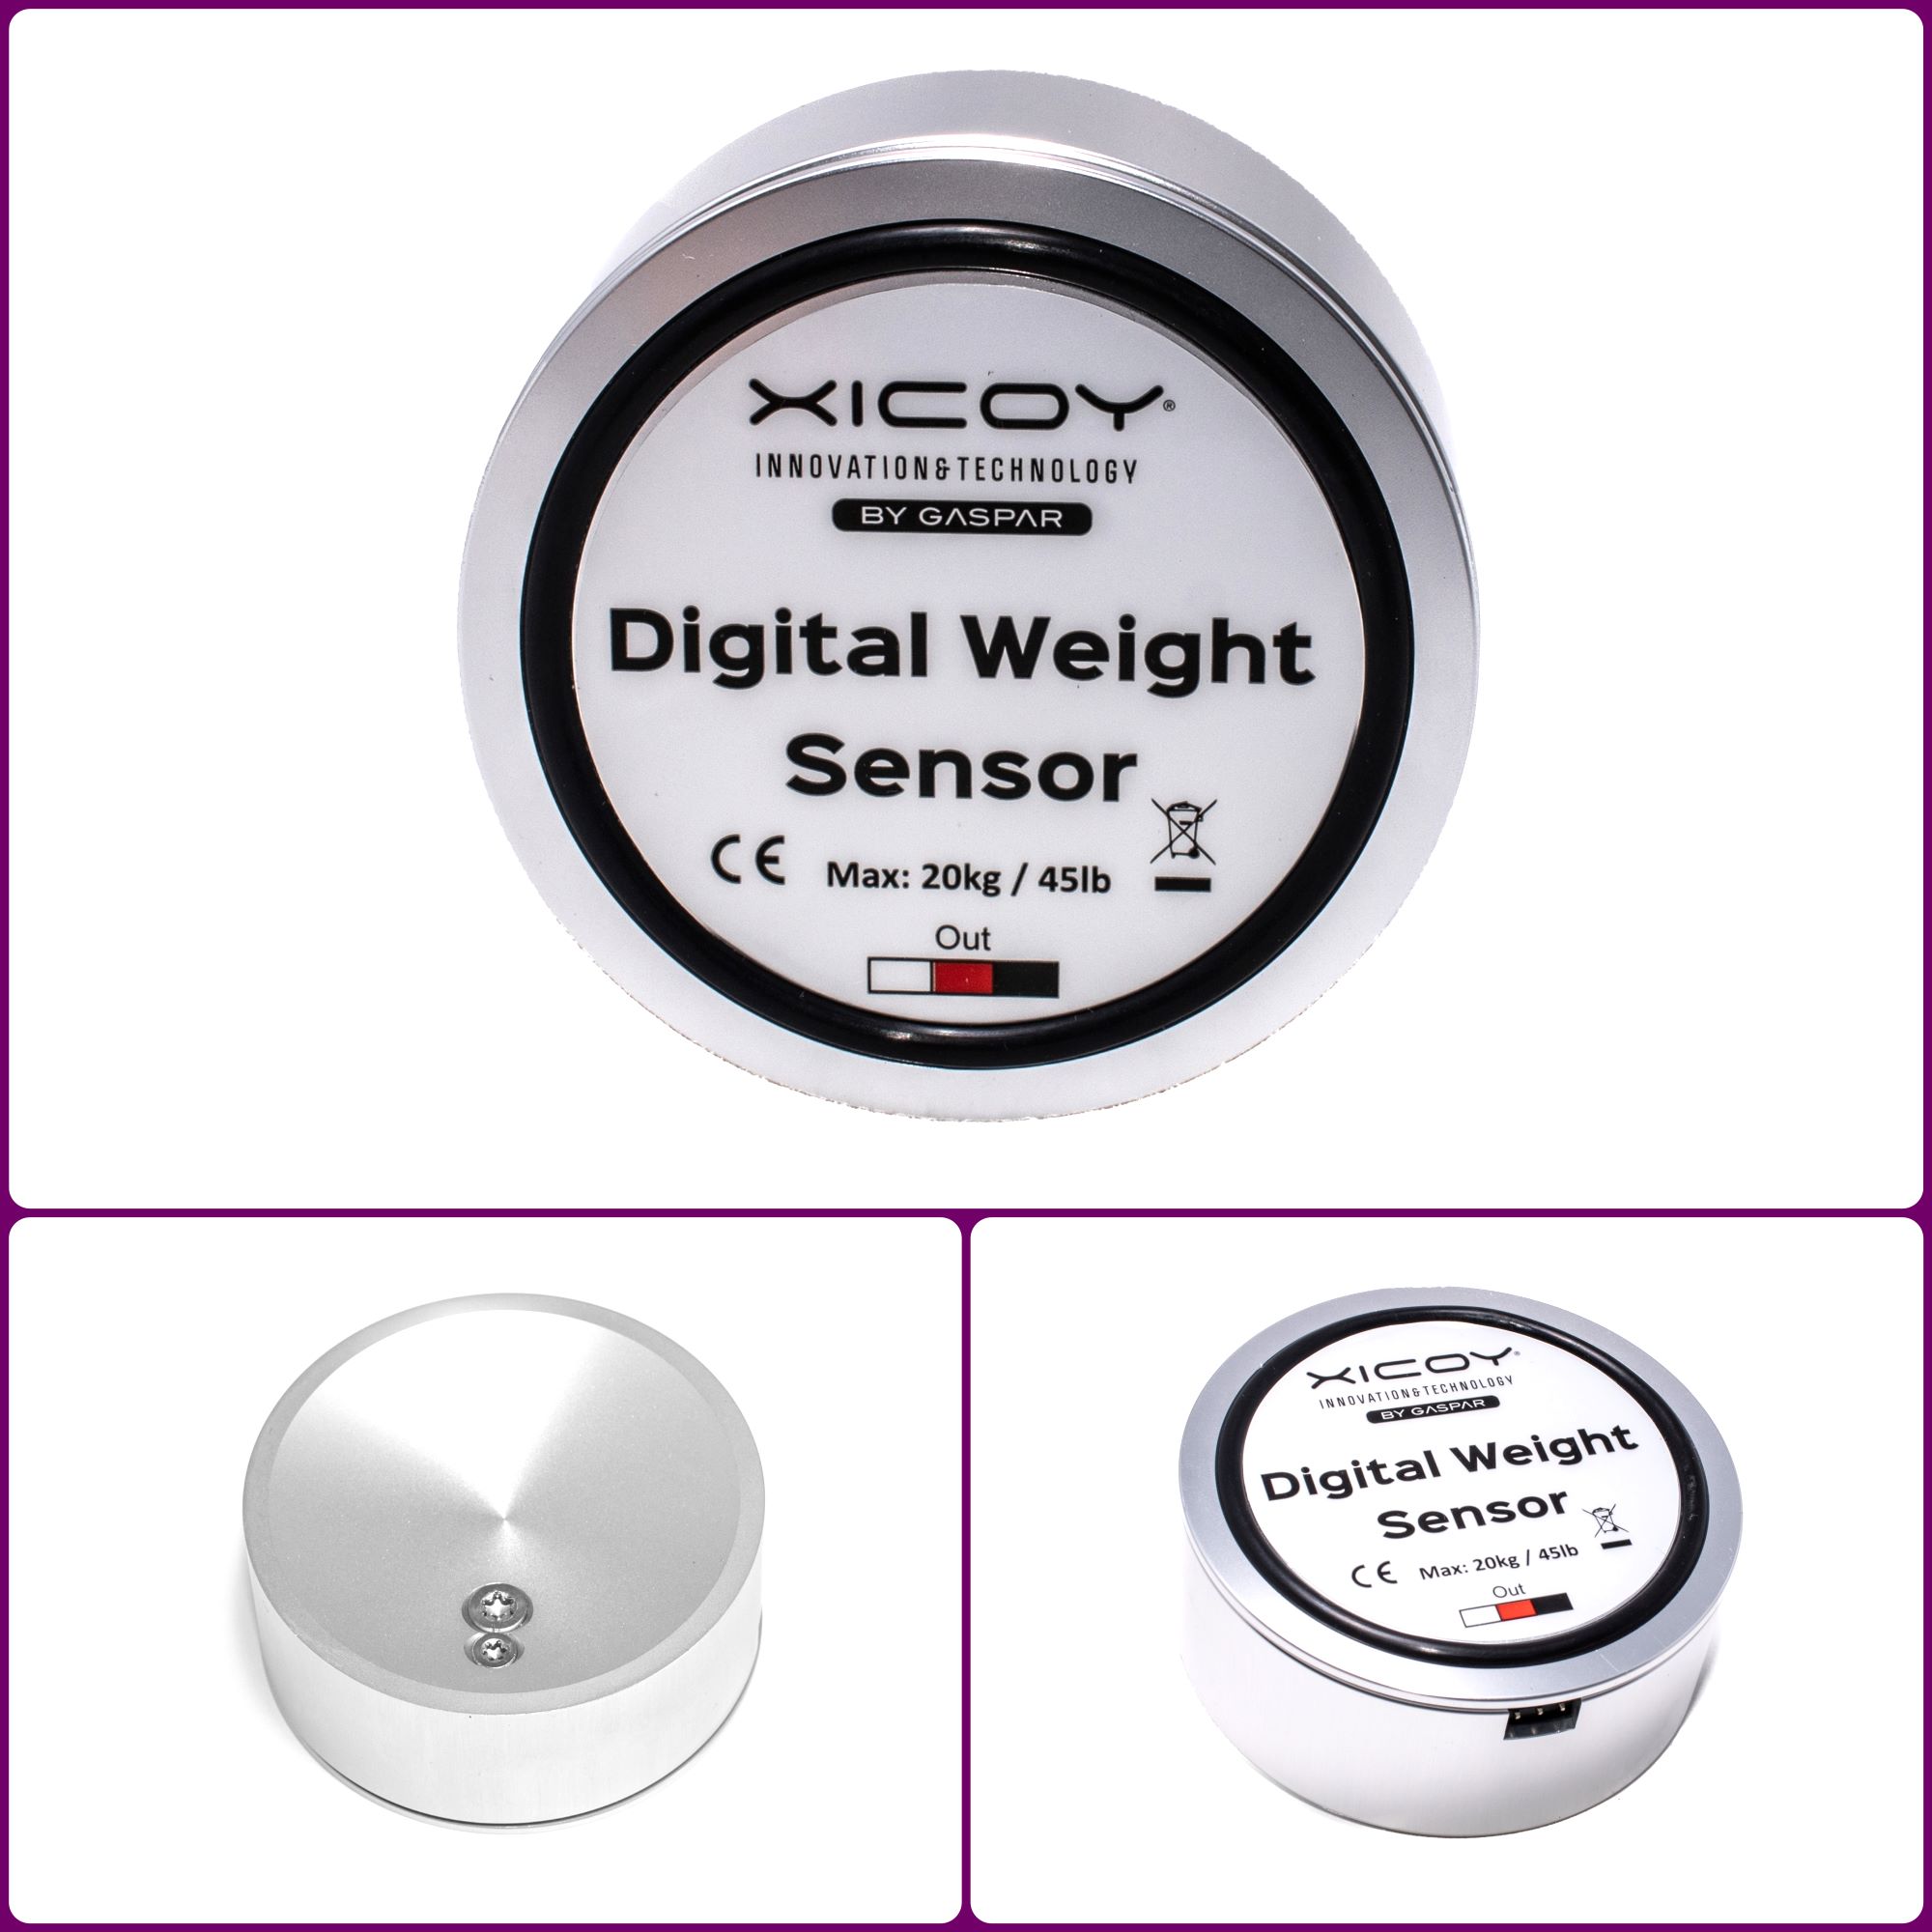 Weight sensor CGMeterPRO up to 20 kg